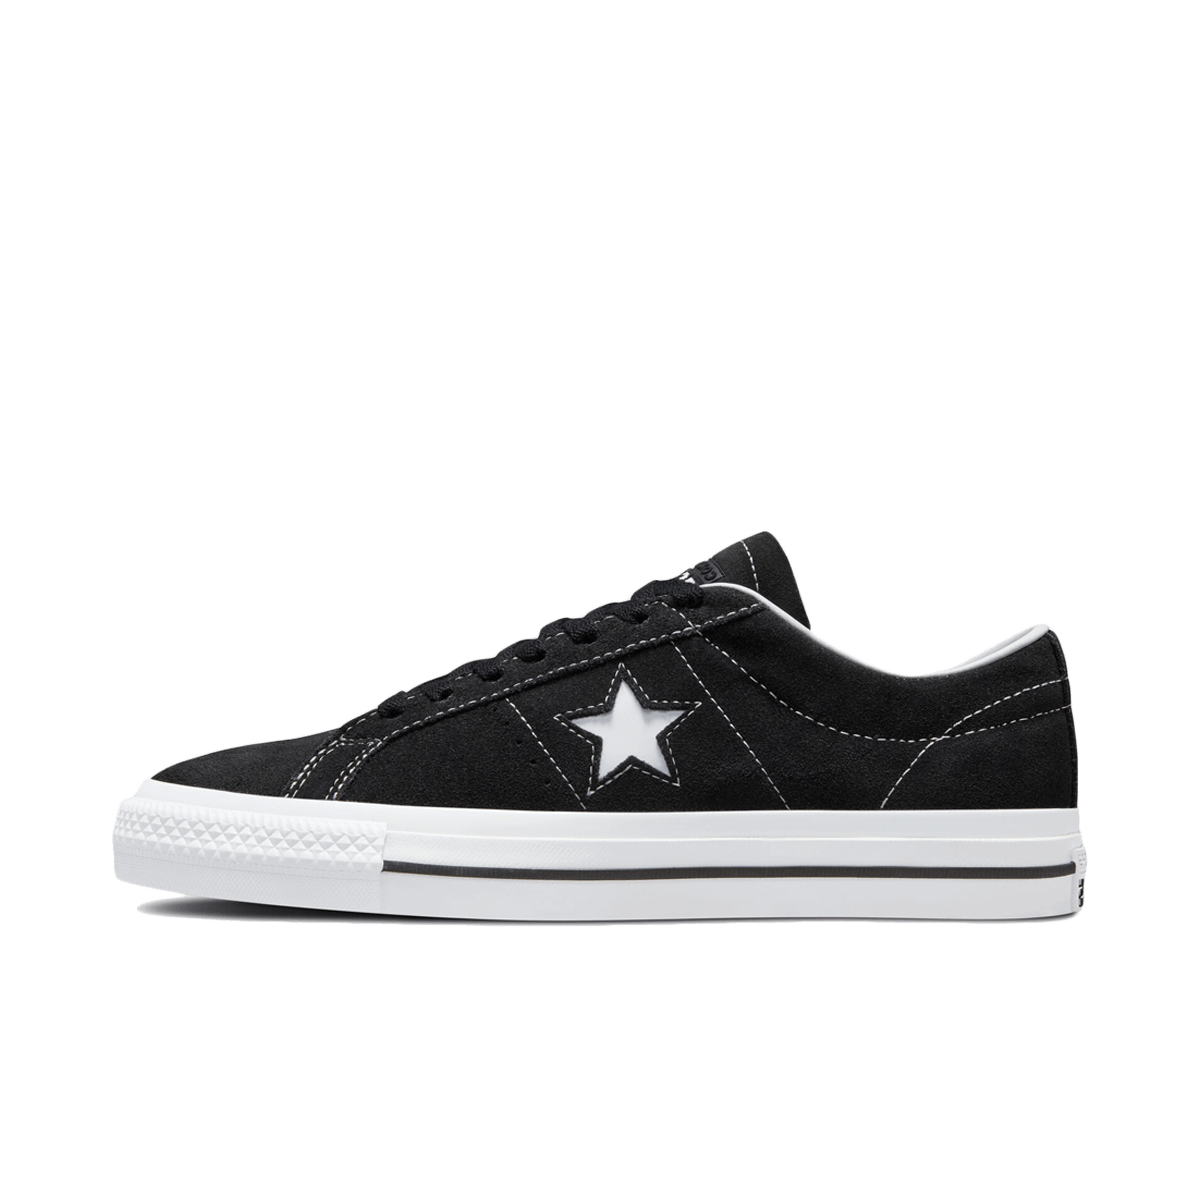 Converse One Star Pro Suede 'Black' 171327C